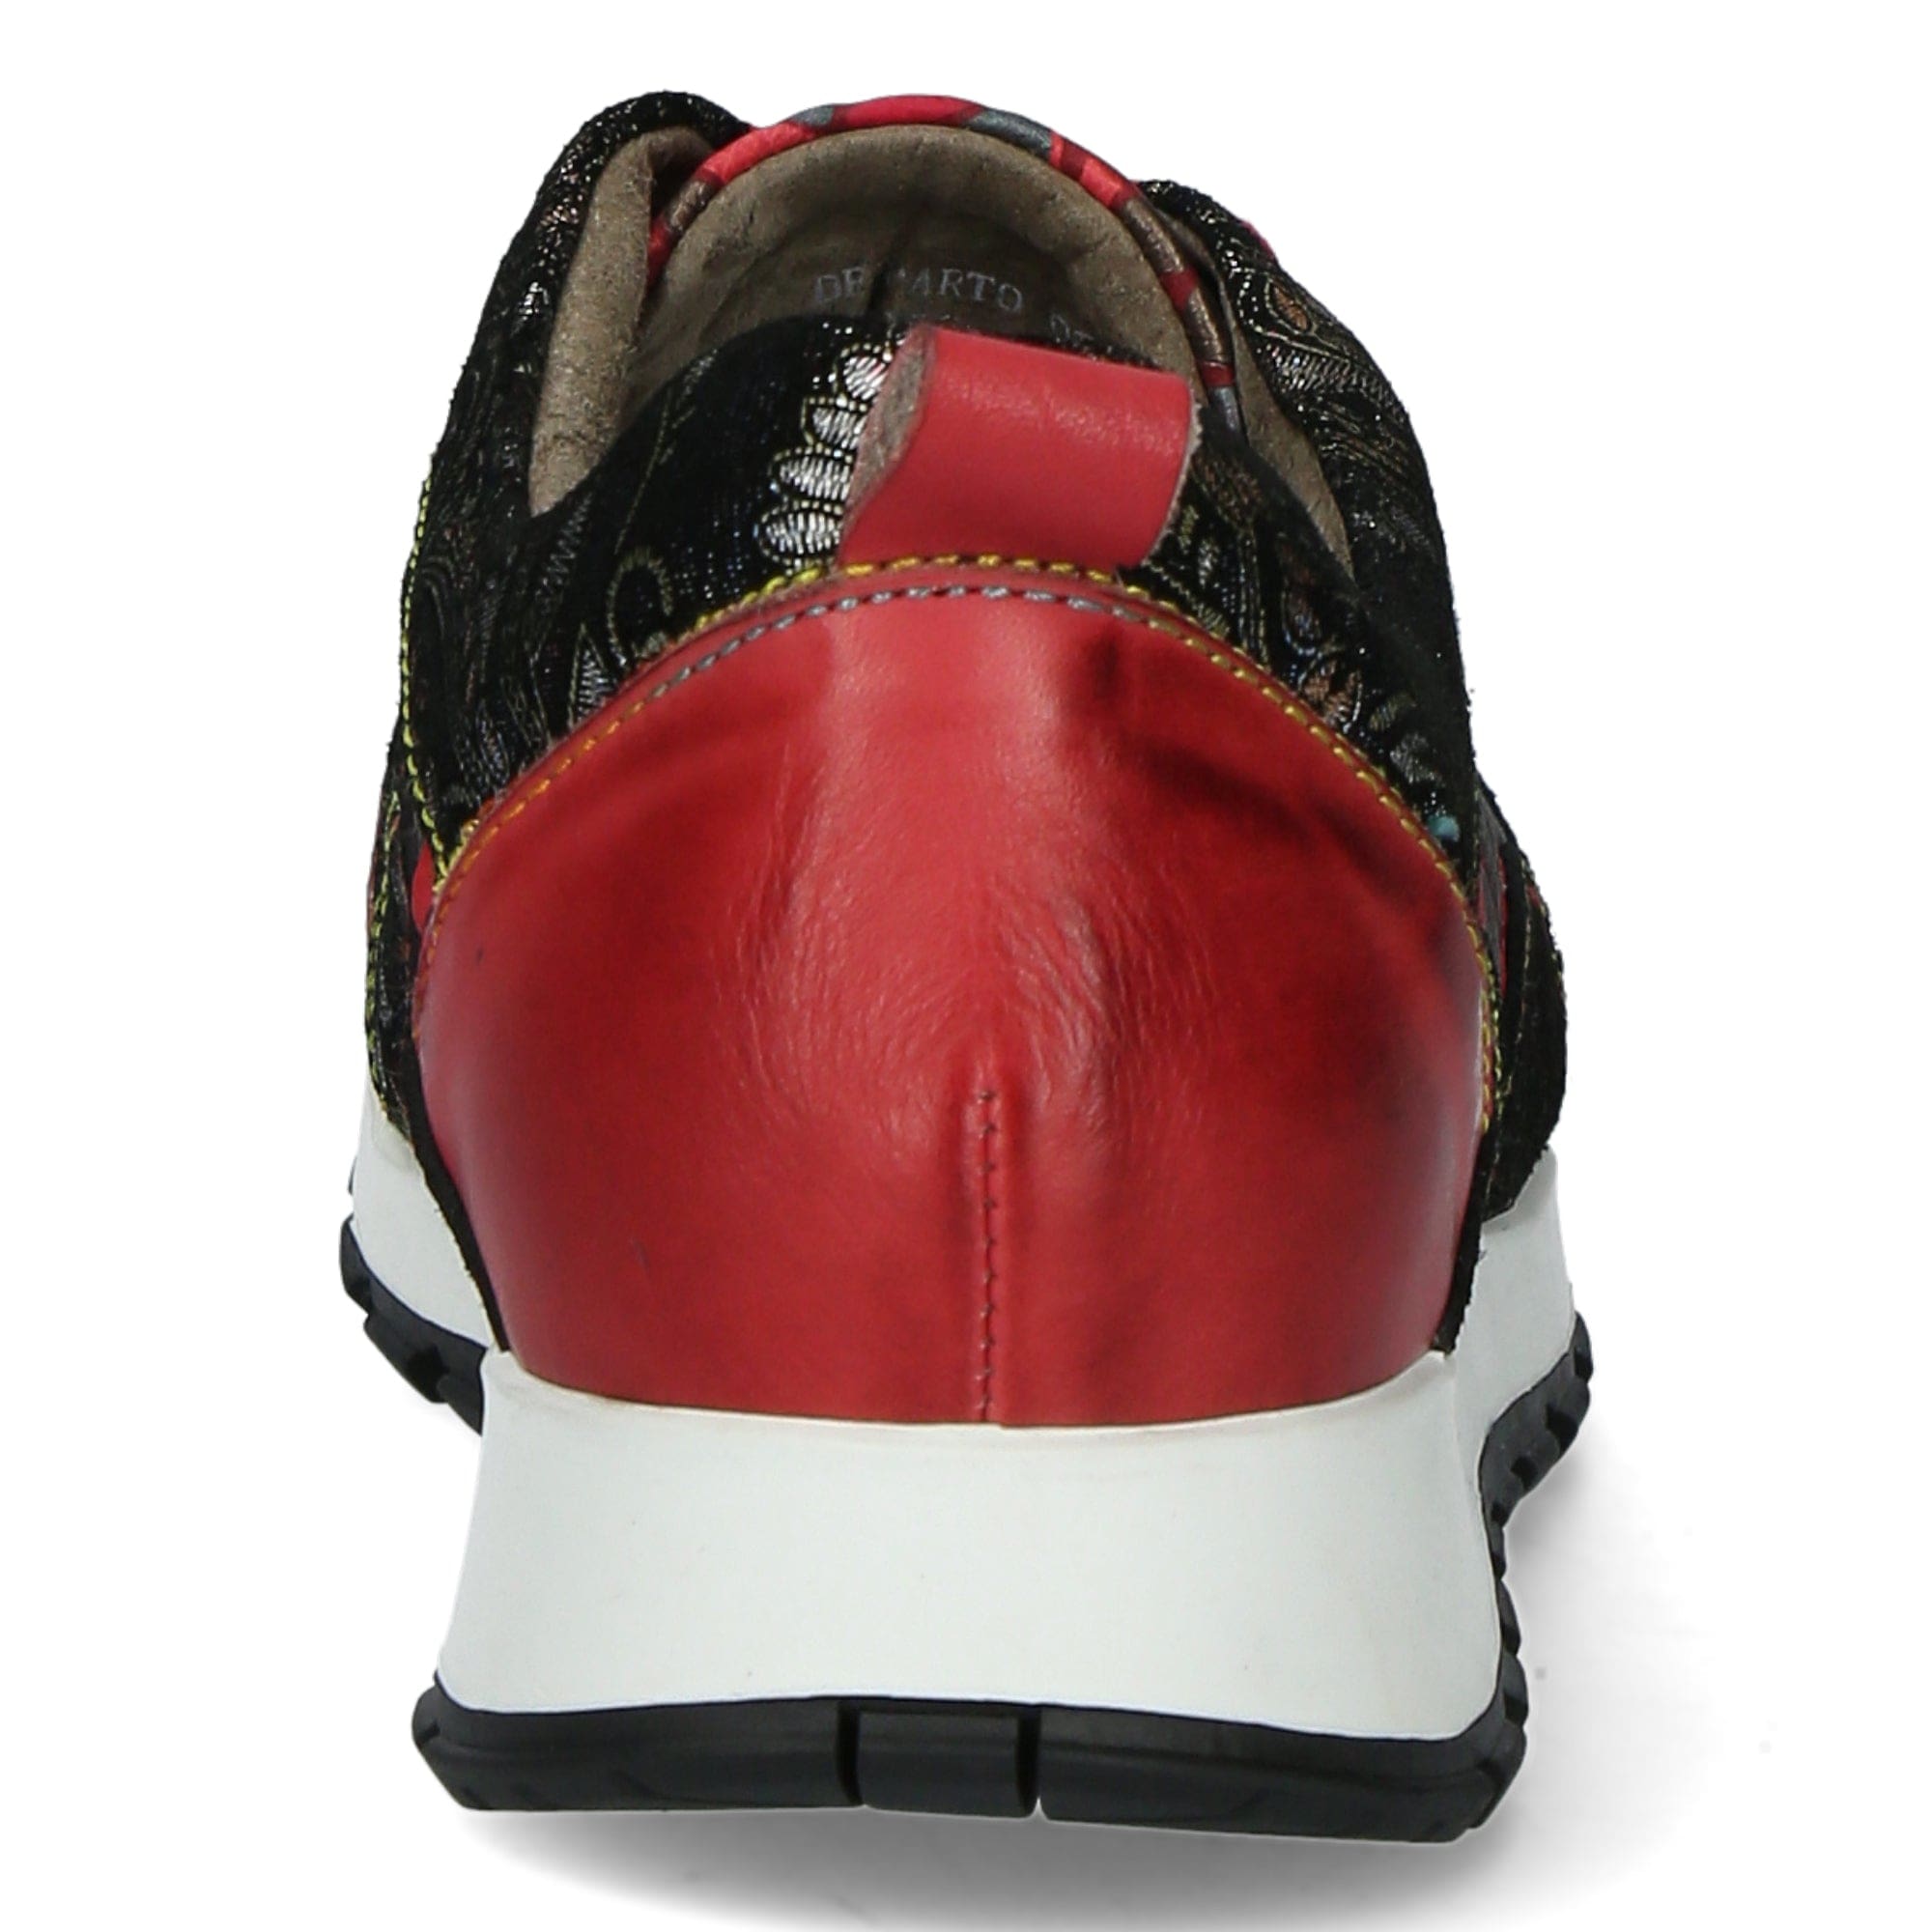 DECPARTO 02A shoe - Sport